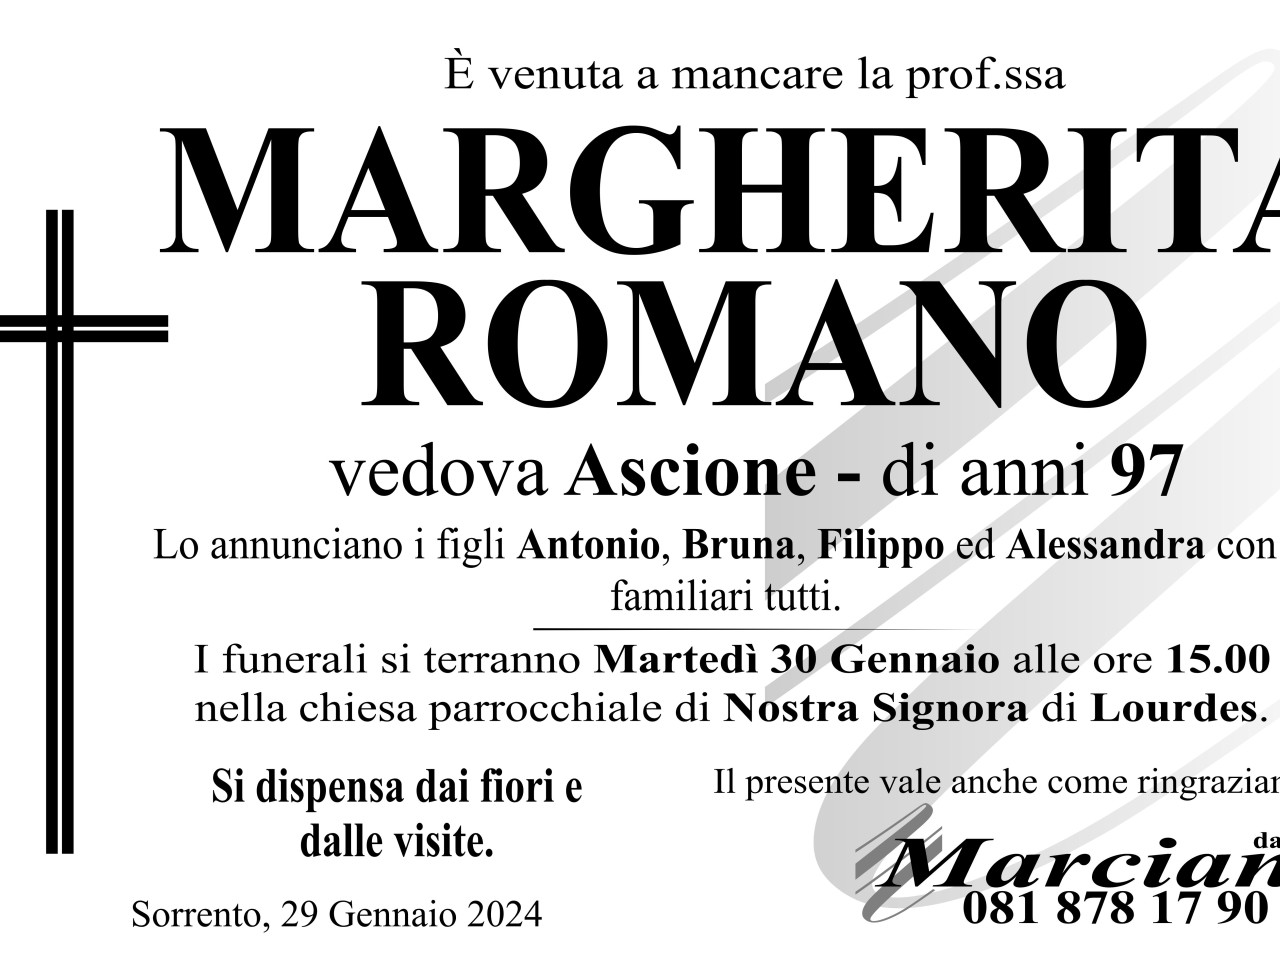 Margherita Romano